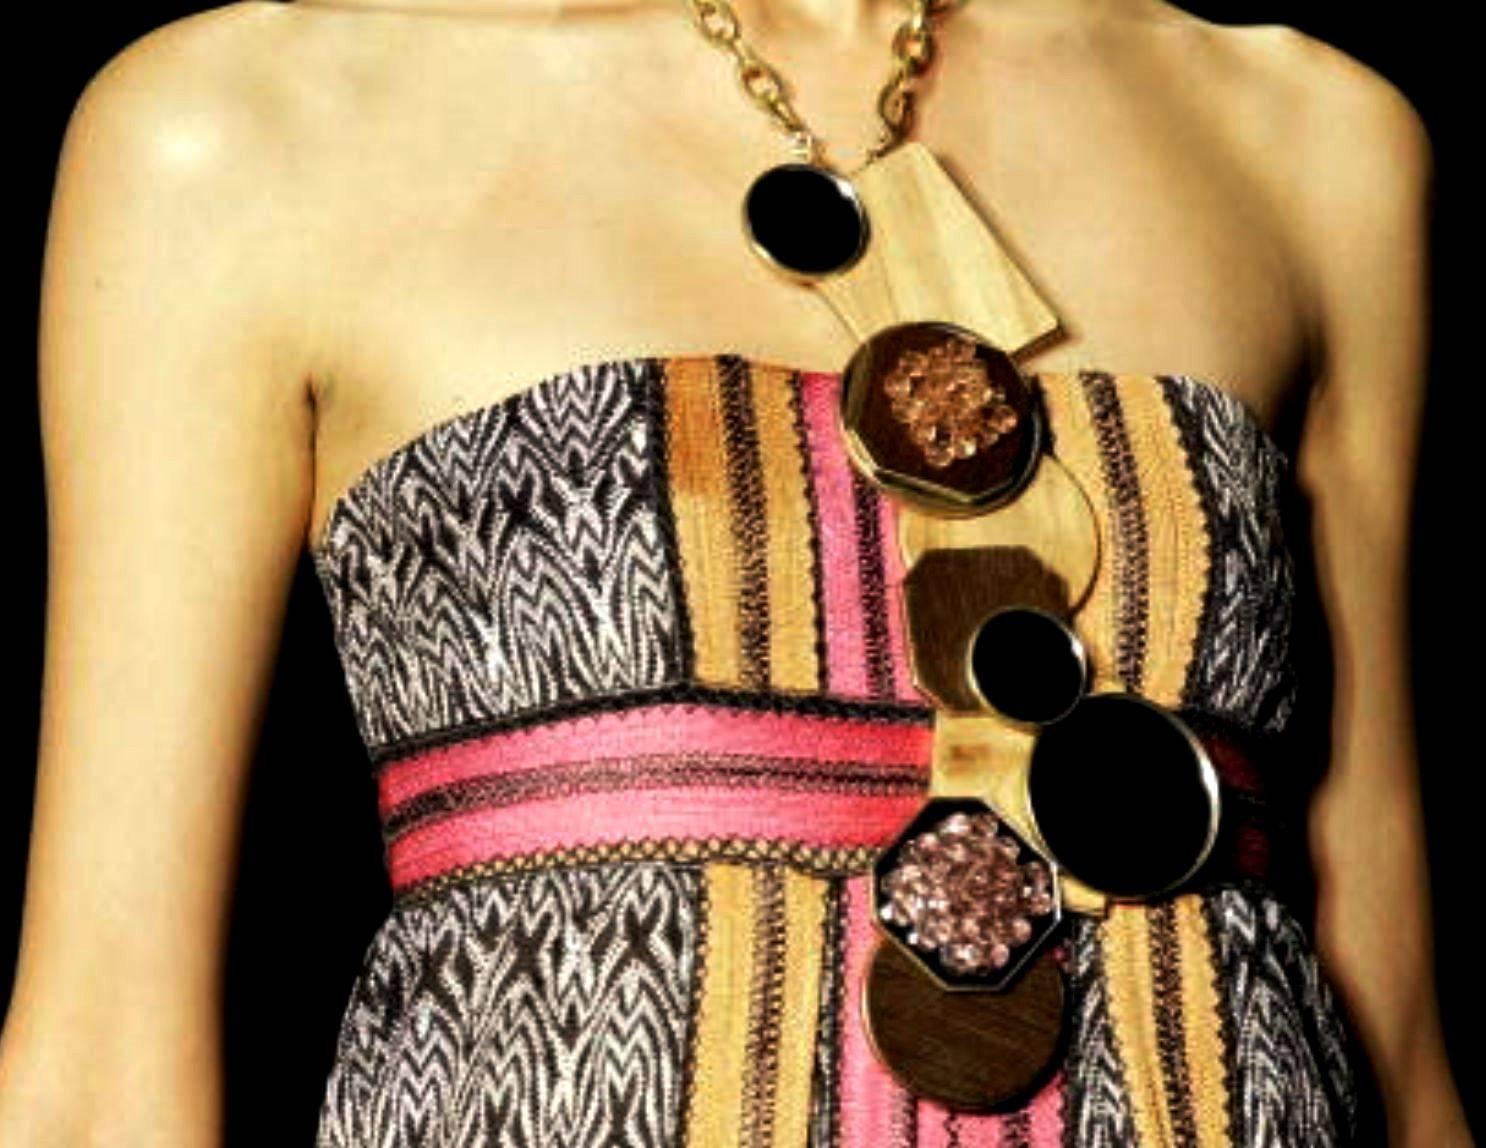 MISSONI Monochrome Crochet Knit Maxi Dress Gown Colorblock Trimming 42 For Sale 2